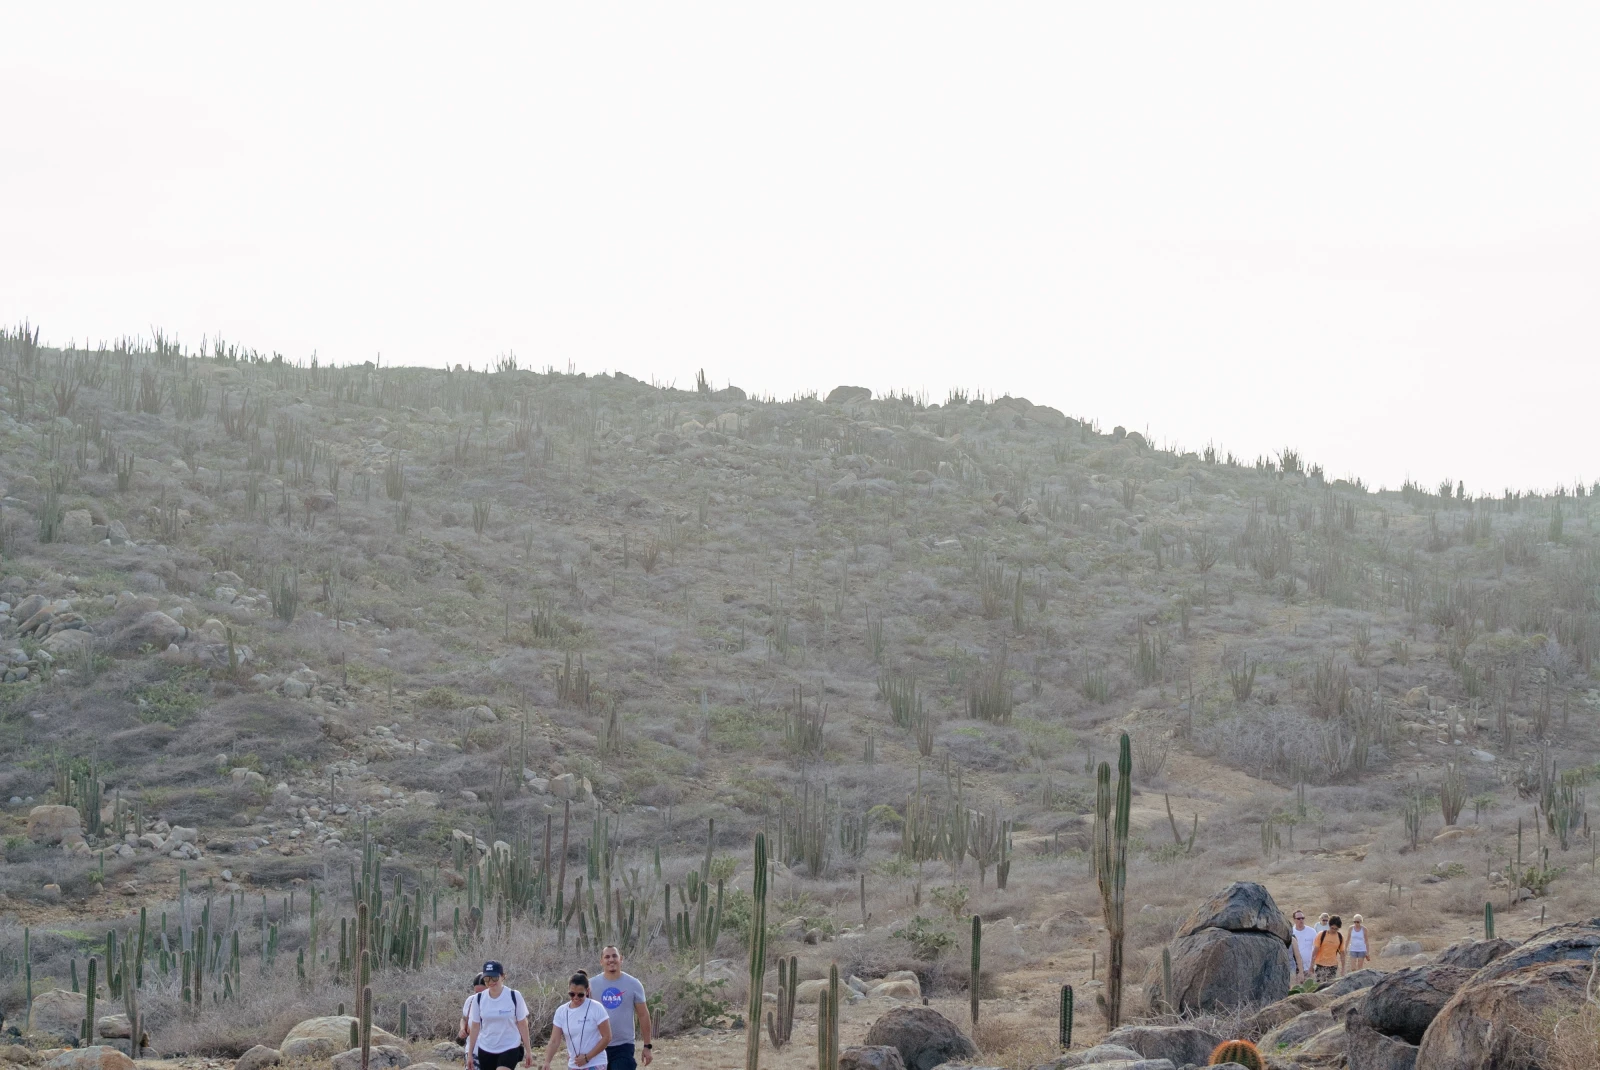 Group of people hike amongst cacti in Aruba